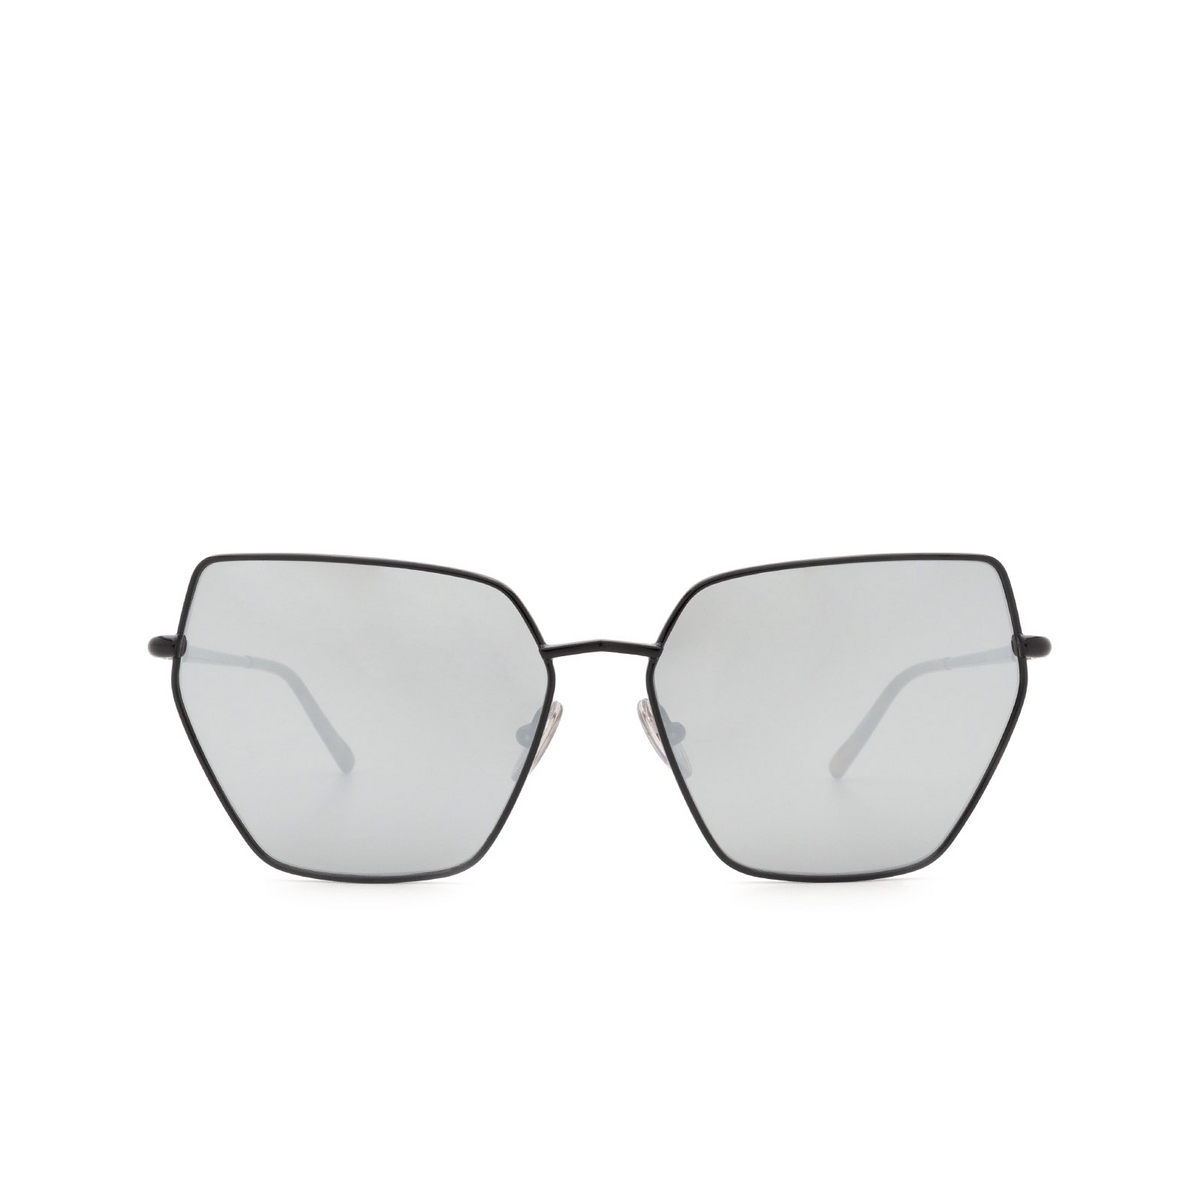 Sportmax® Irregular Sunglasses: SM0036 color Black 01C - front view.